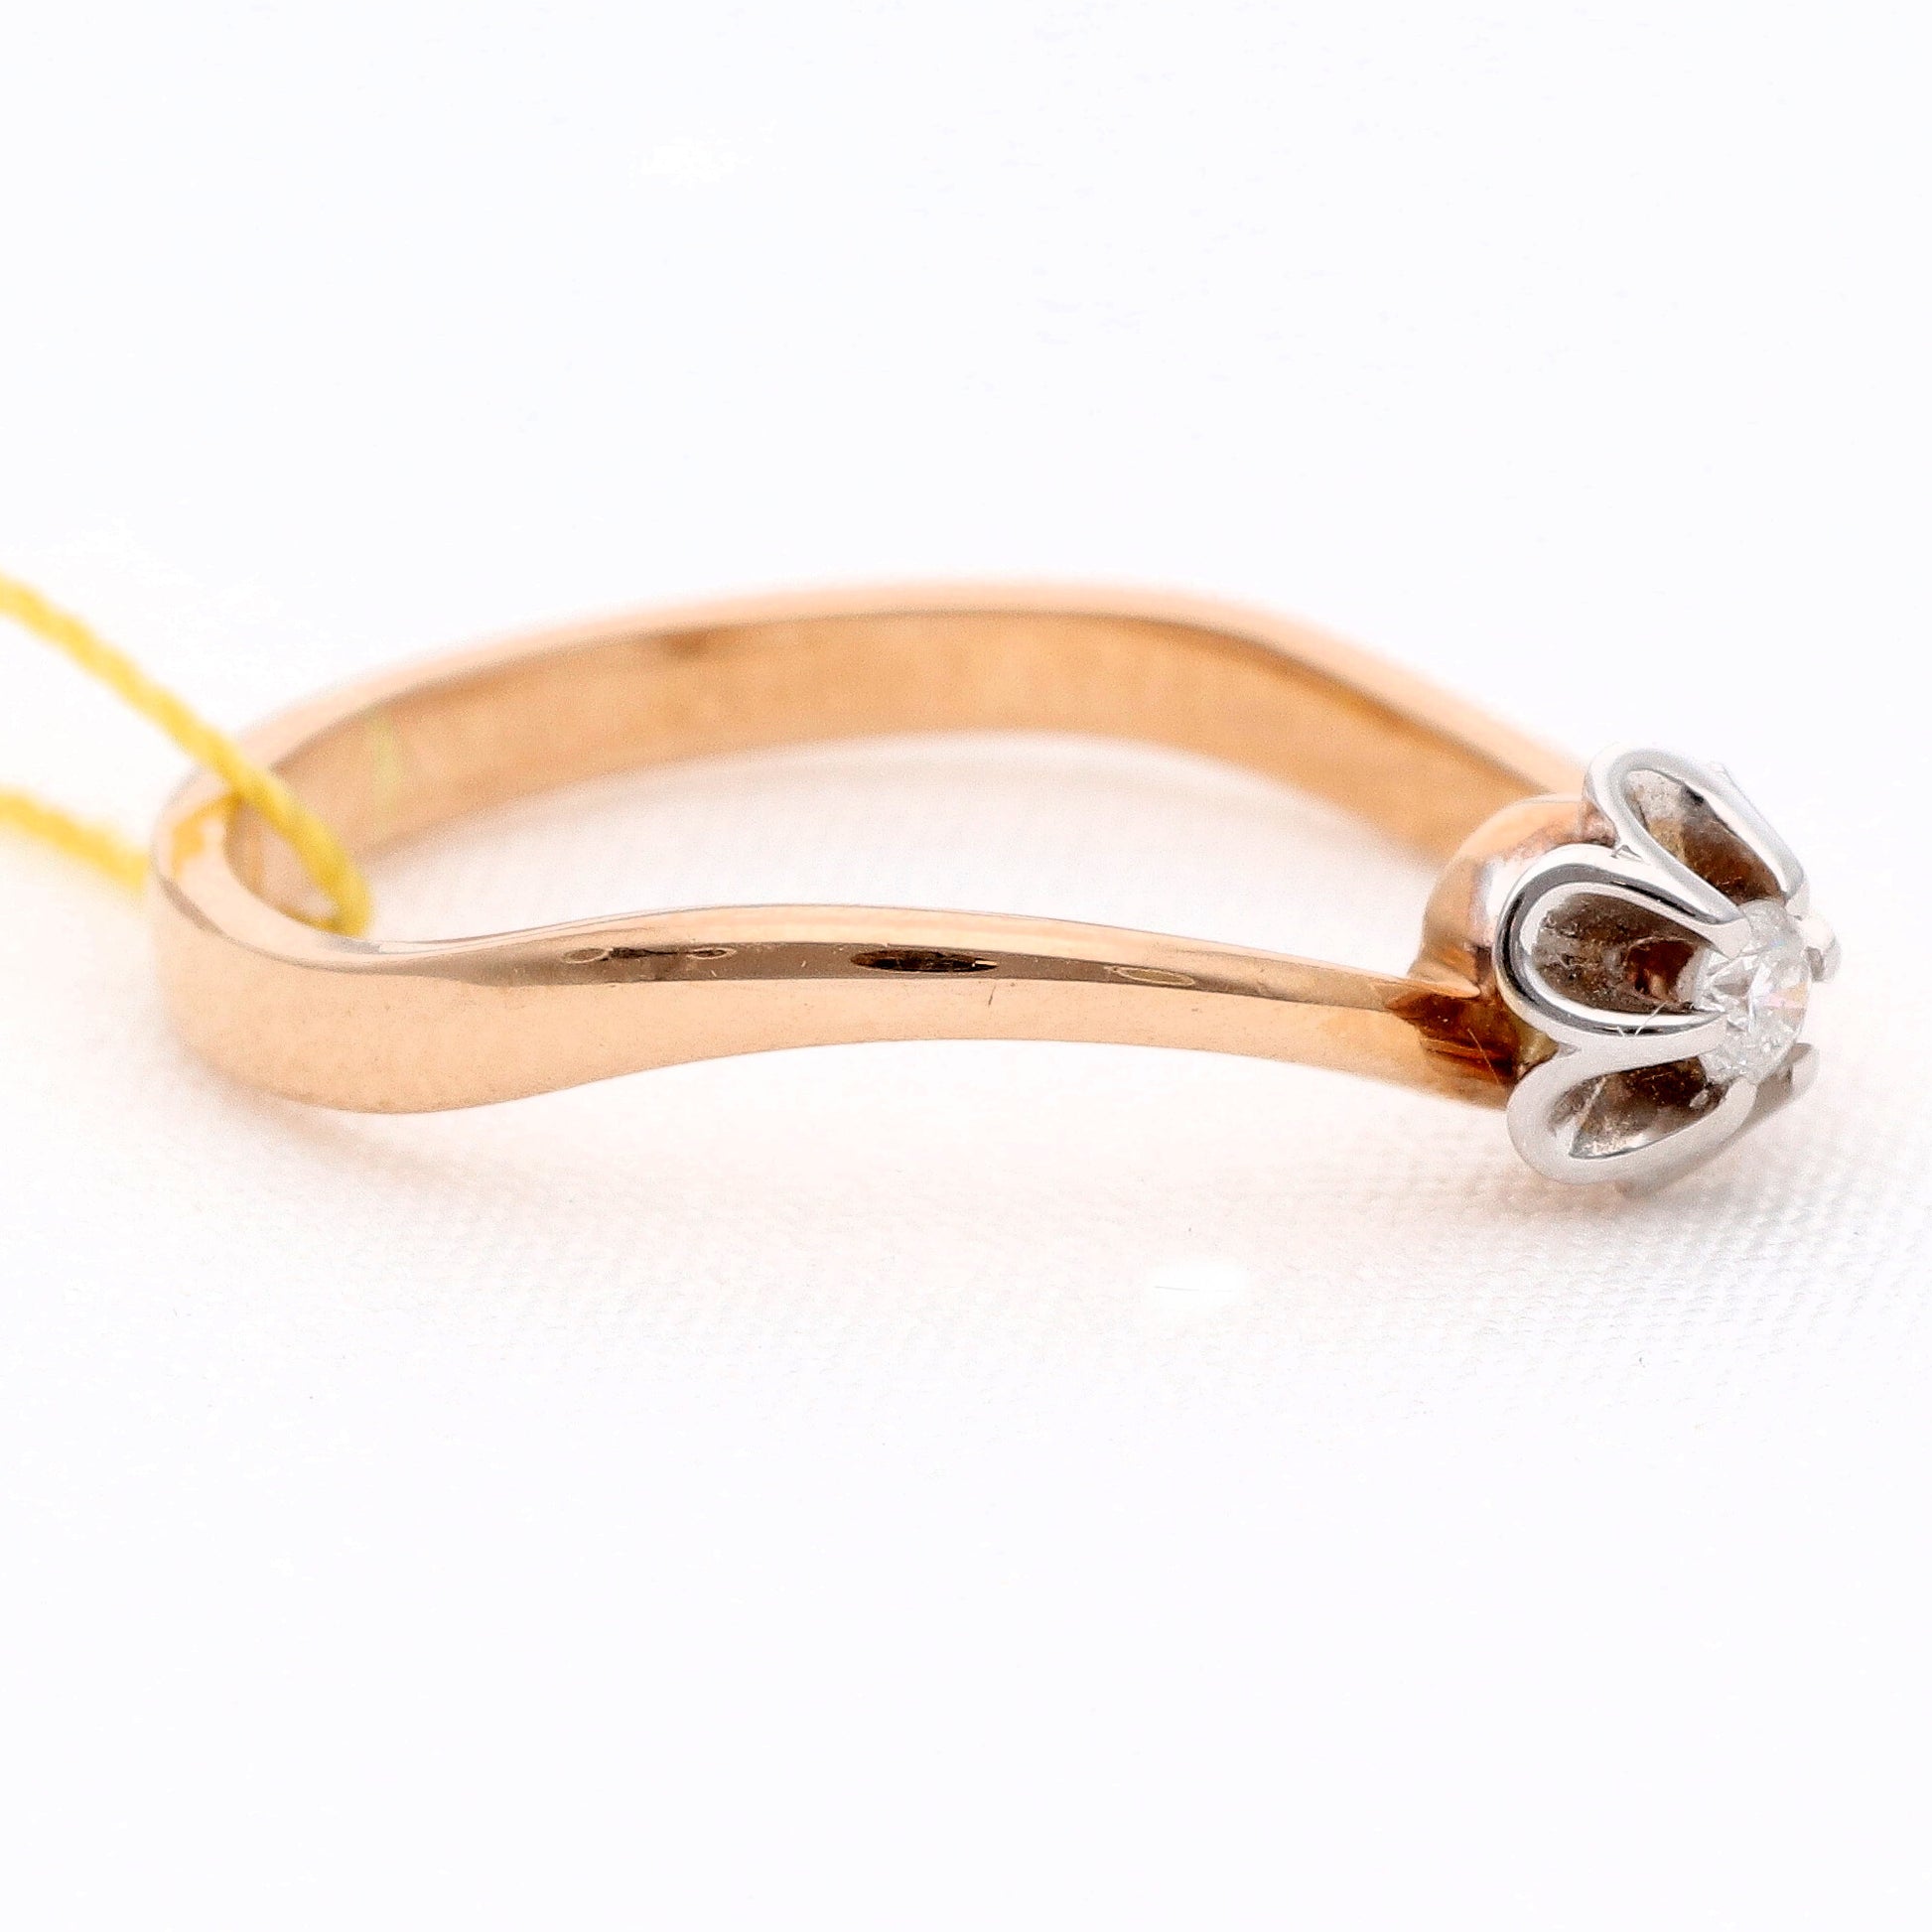 Auksinis žiedas su deimantu 0,044ct vestuviniaiziedai.lt